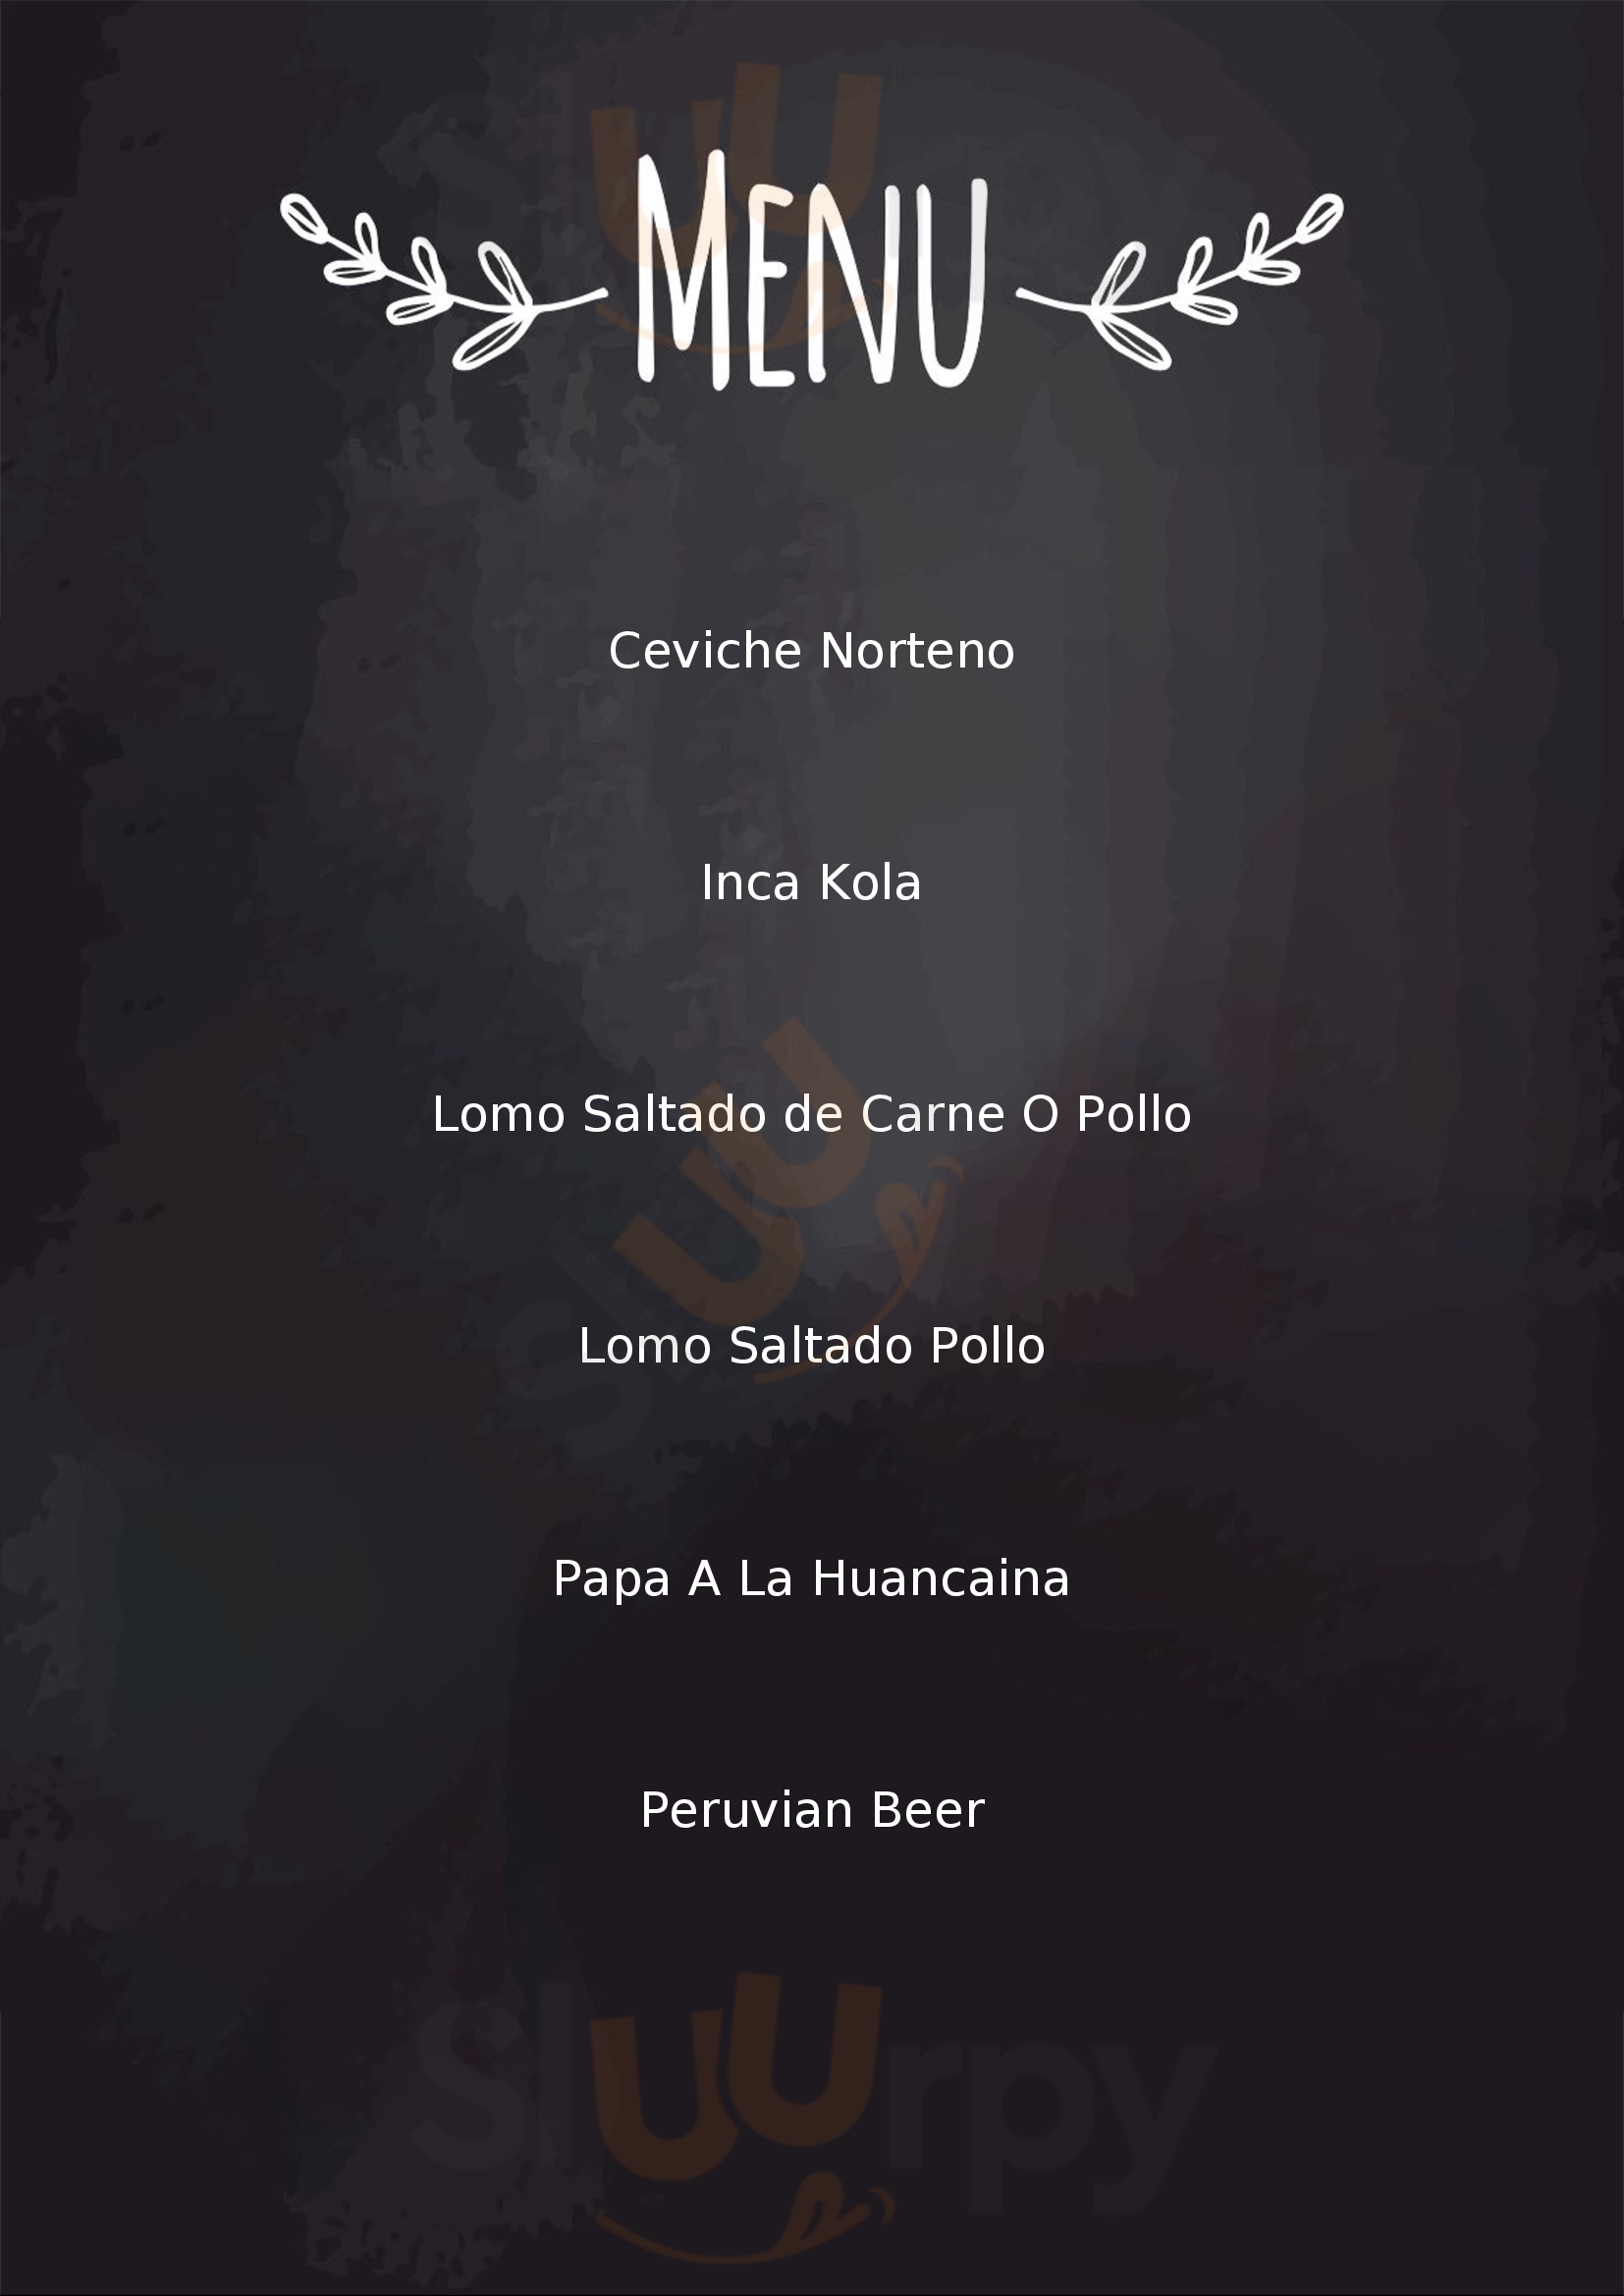 Sabor Peruvian And Latin Miami Menu - 1